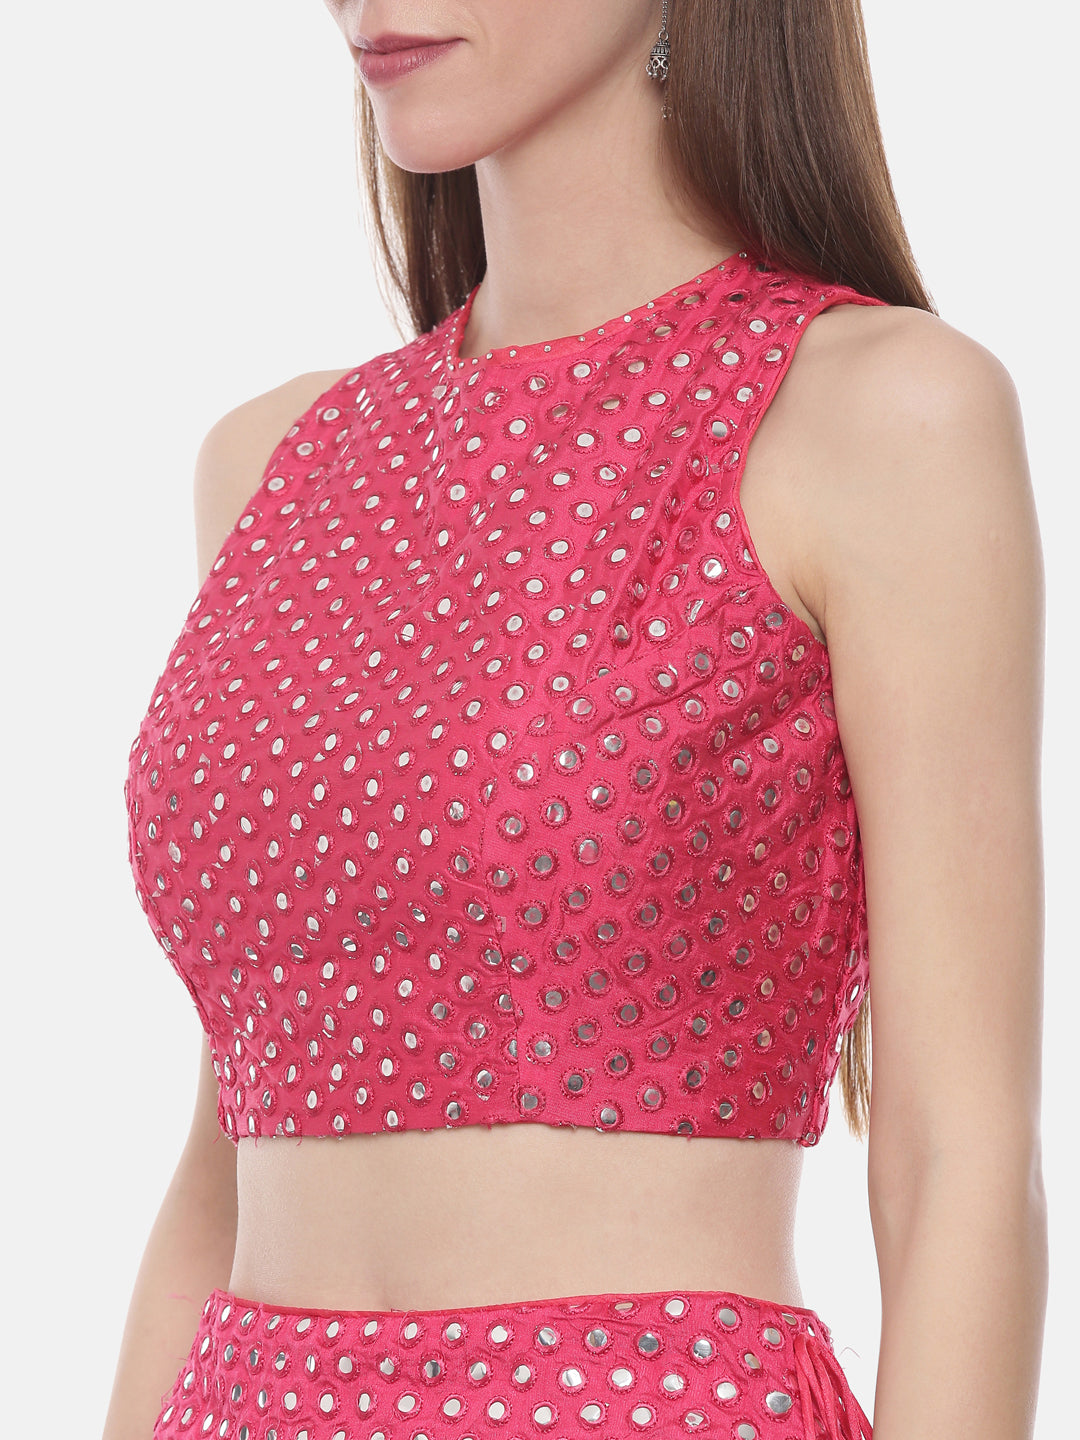 Neeru'S Pink Color, Chiffon Fabric Ghagra Set